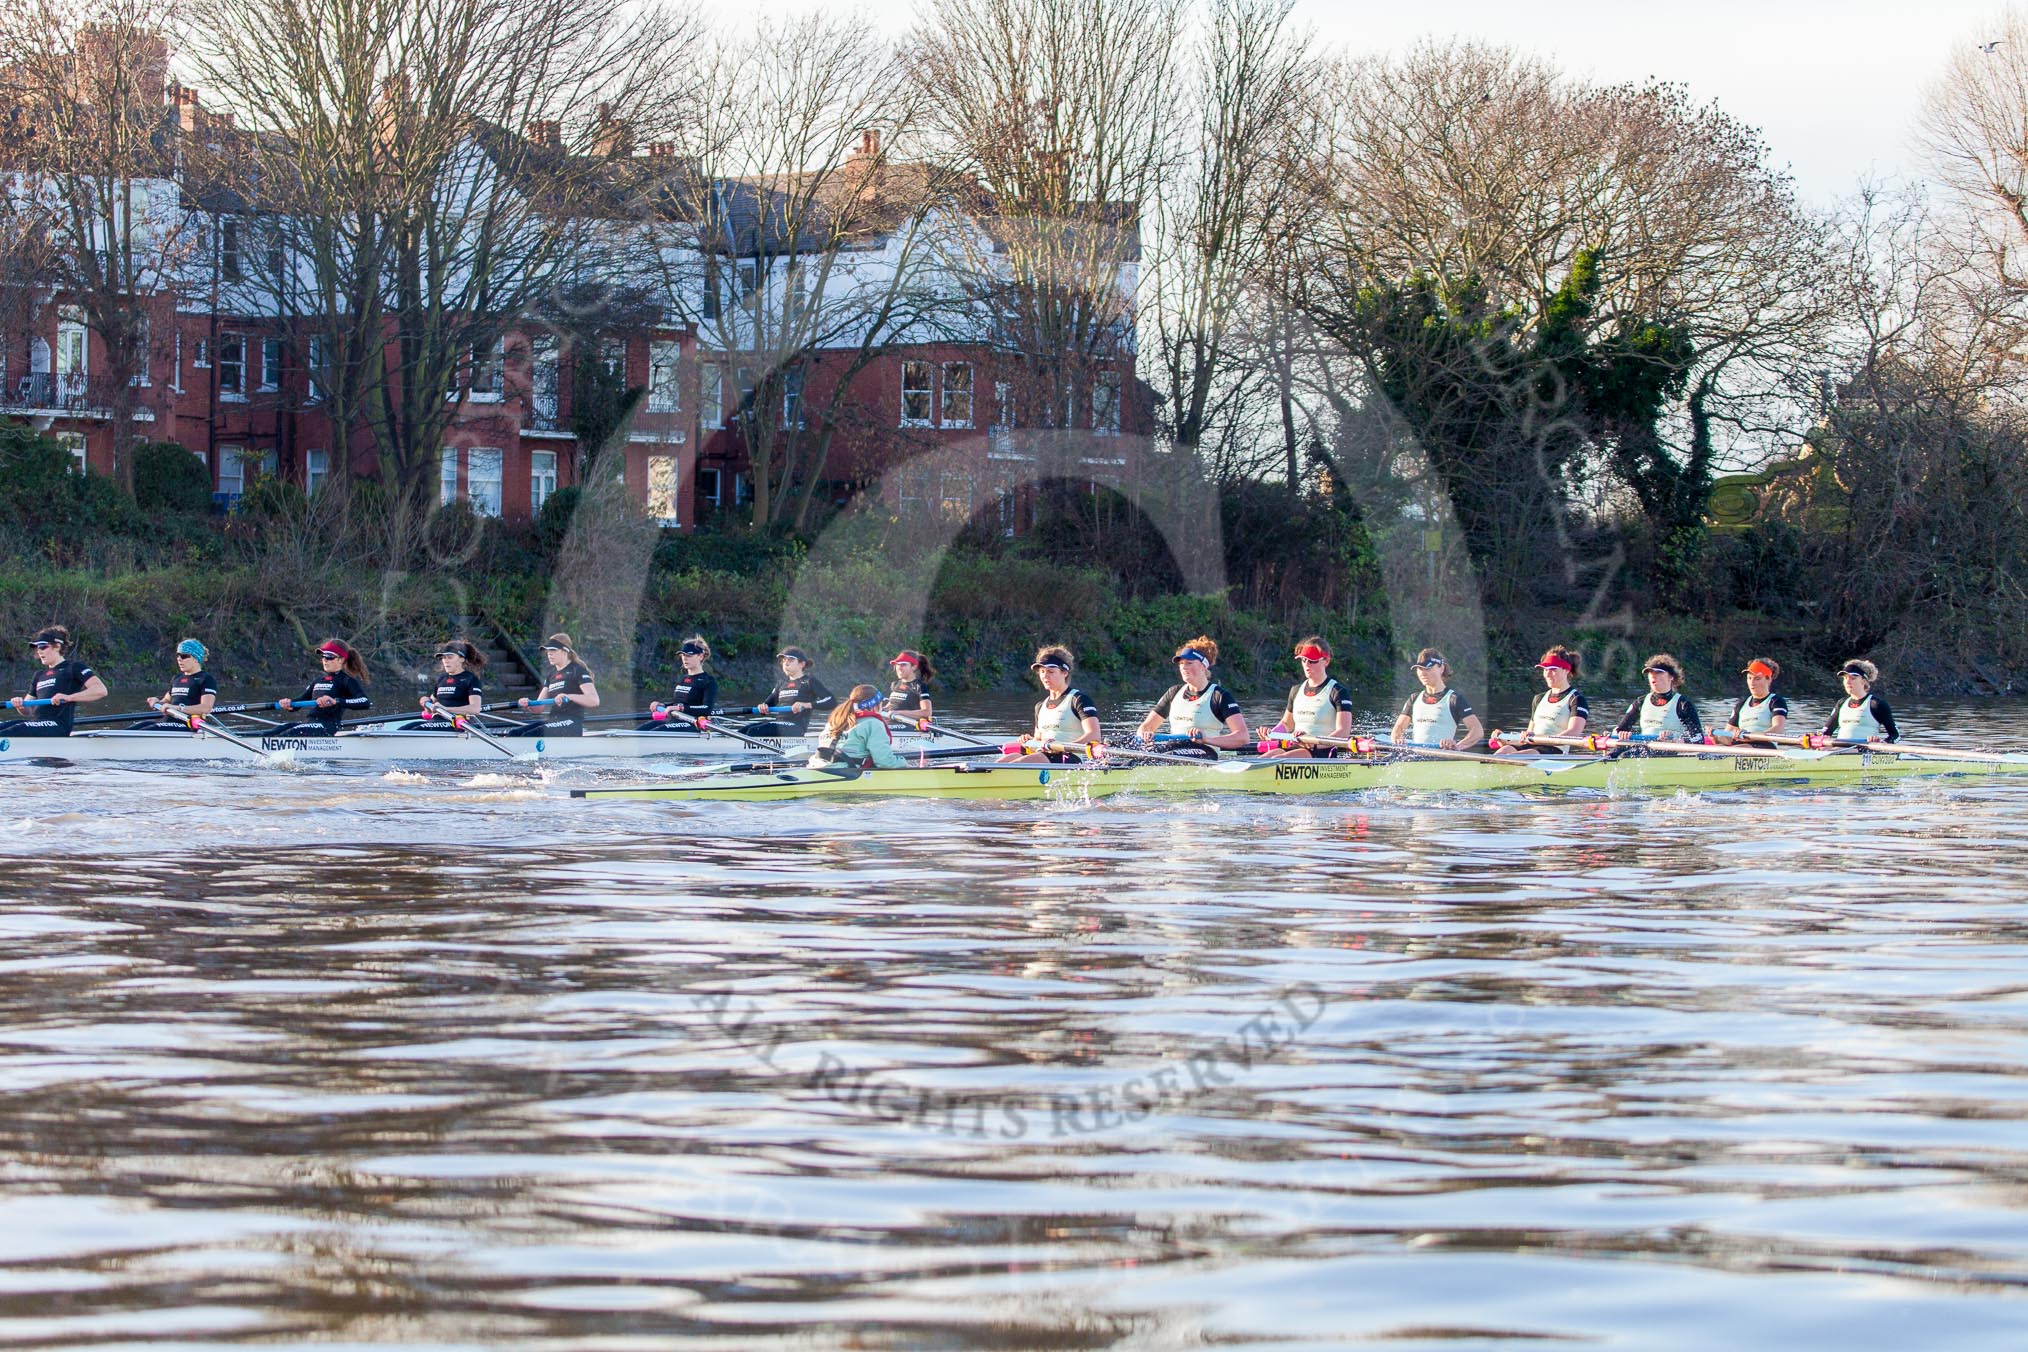 The Boat Race season 2014 - Women's Trial VIIIs(CUWBC, Cambridge): Nudge Nudge vs Wink Wink.
River Thames between Putney Bridge and Mortlake,
London SW15,

United Kingdom,
on 19 December 2013 at 14:09, image #399